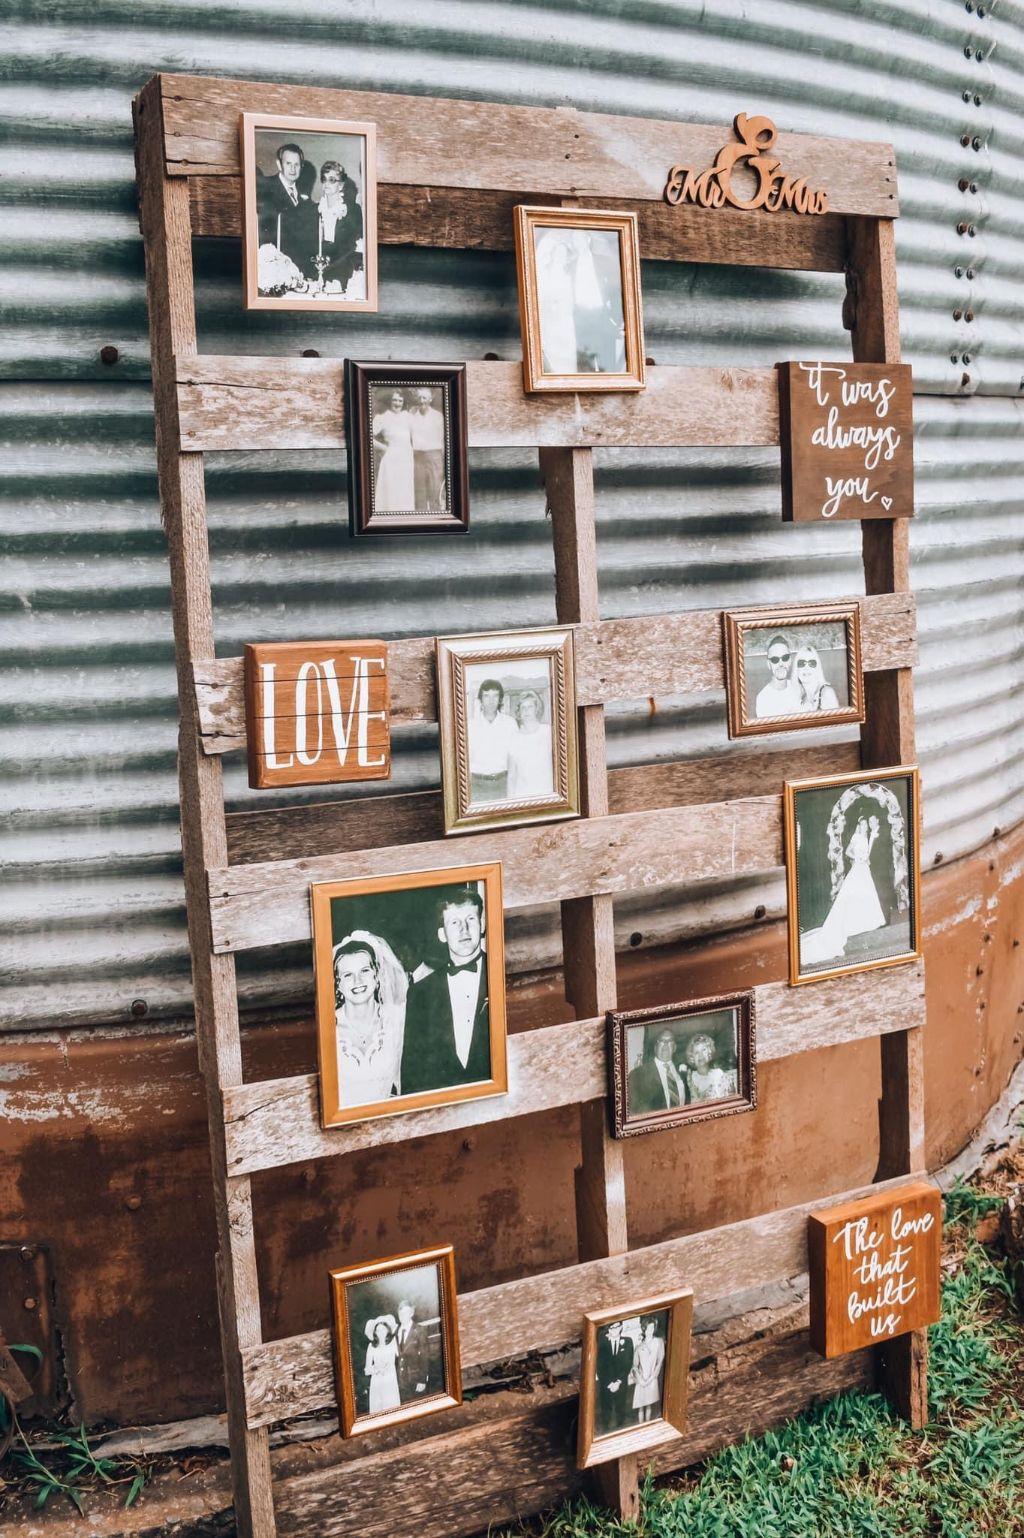 Burks Wedding - Photo arrangement of Bride/Groom family wedding photos on rustic board leaning against silo